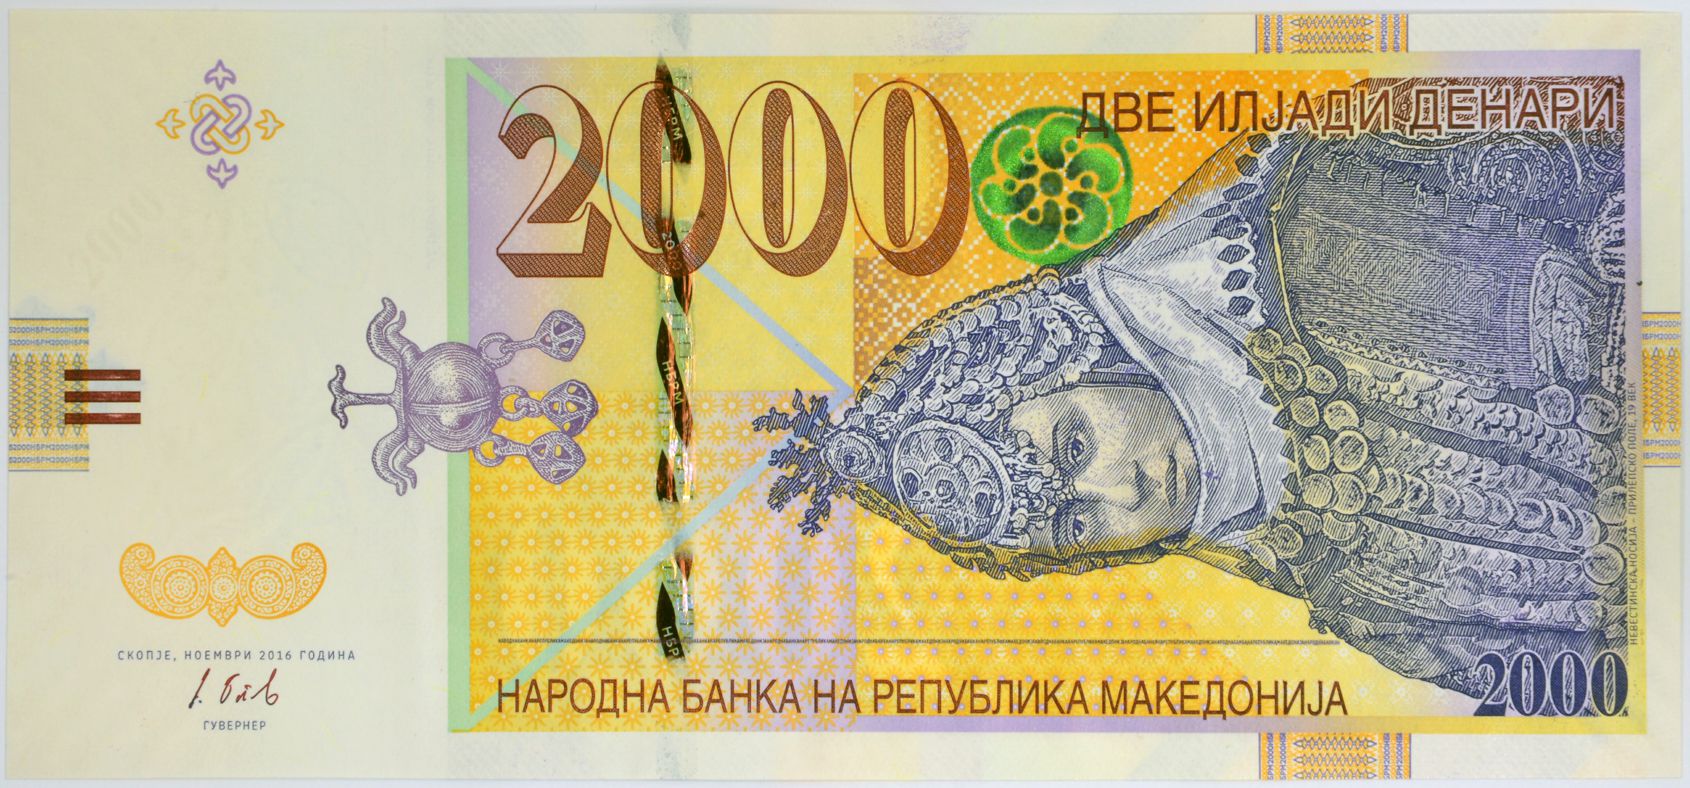 Macedonia to Issue New 200 & 2,000 Denar Banknotes